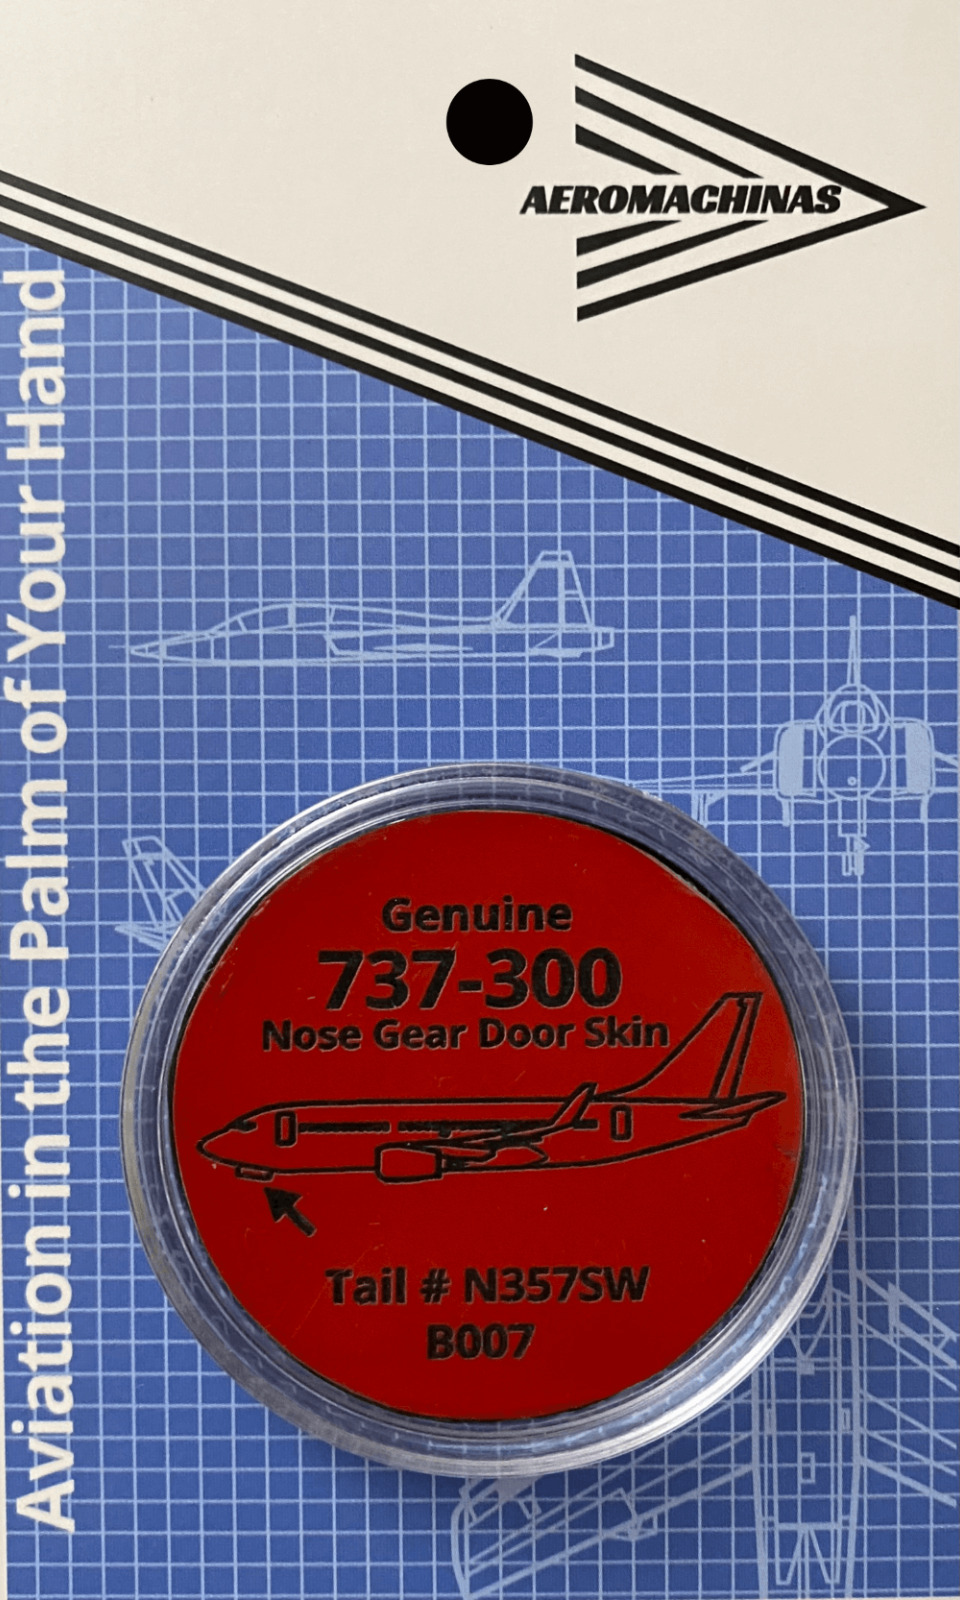 Former Southwest Boeing 737 Aircraft Skin Challenge Coin